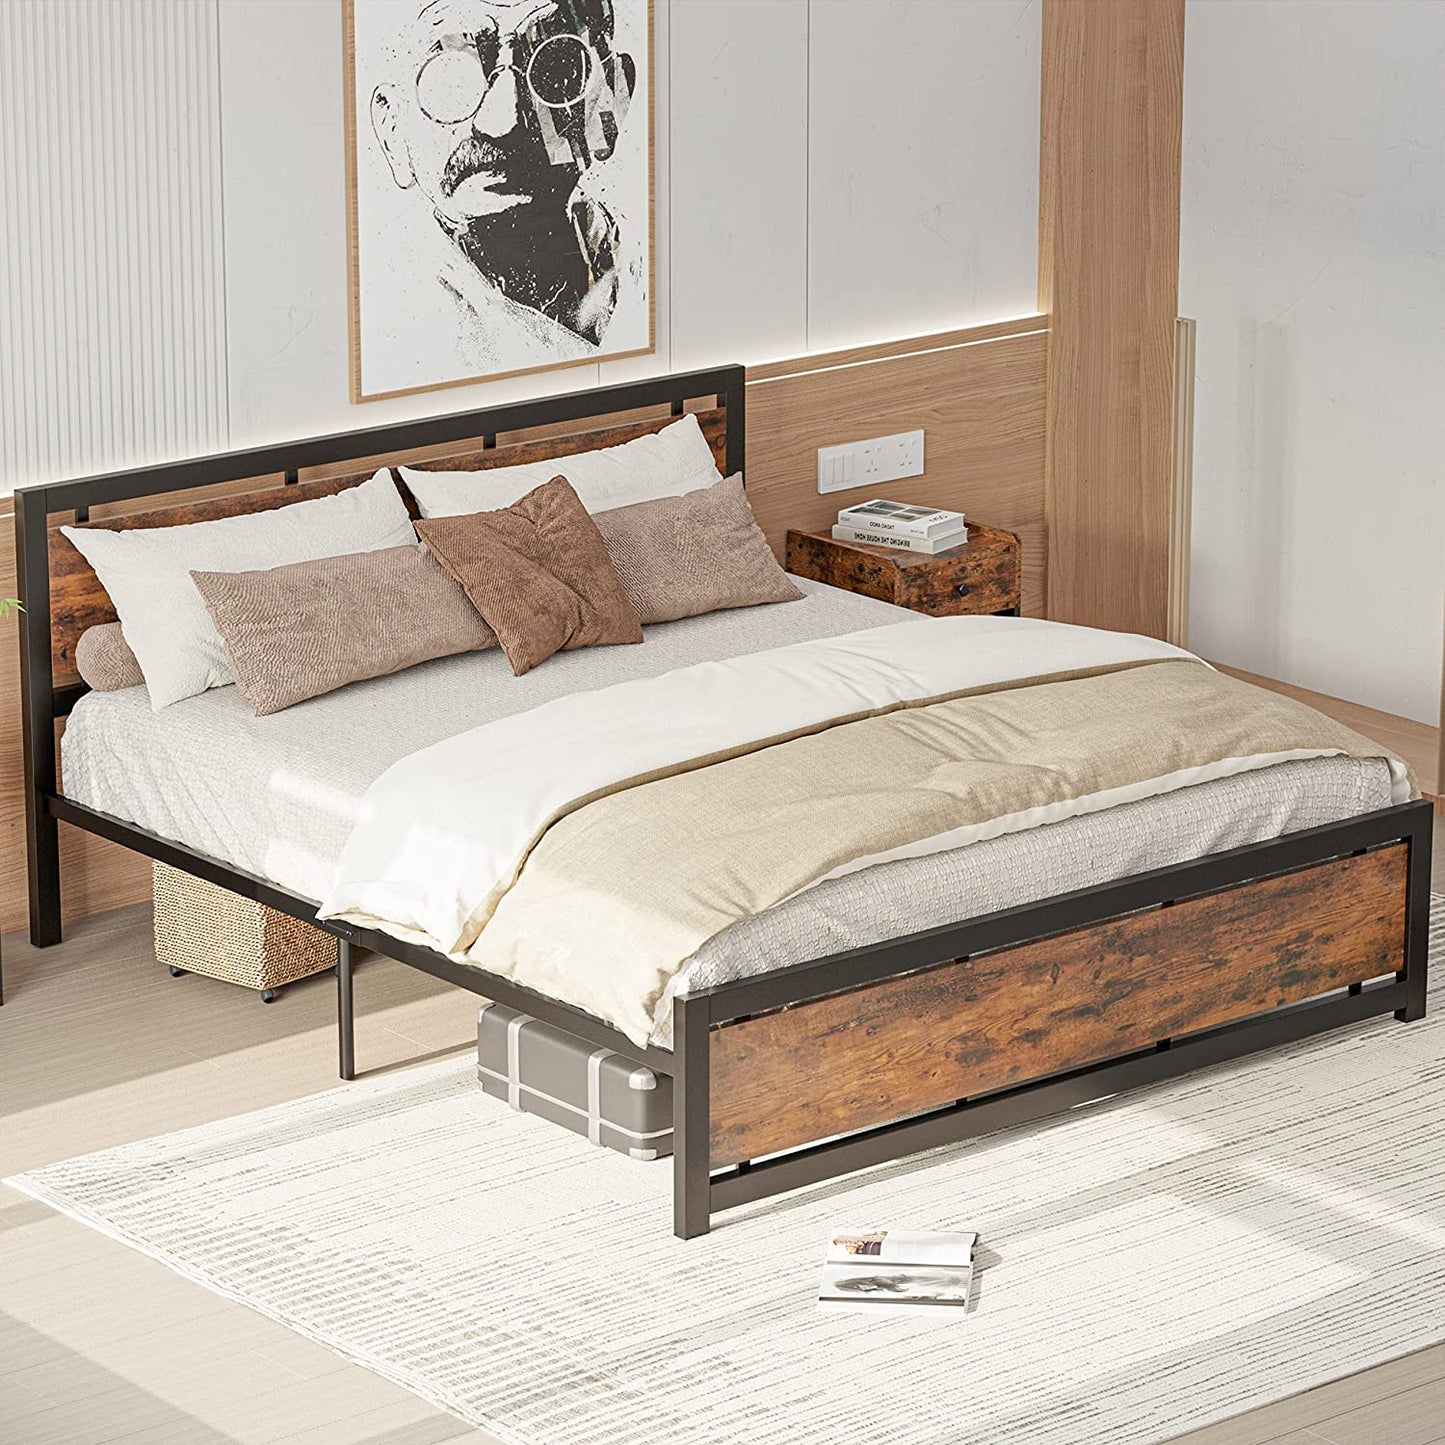 LIKIMIO California King Bed Frames Vintage Brown